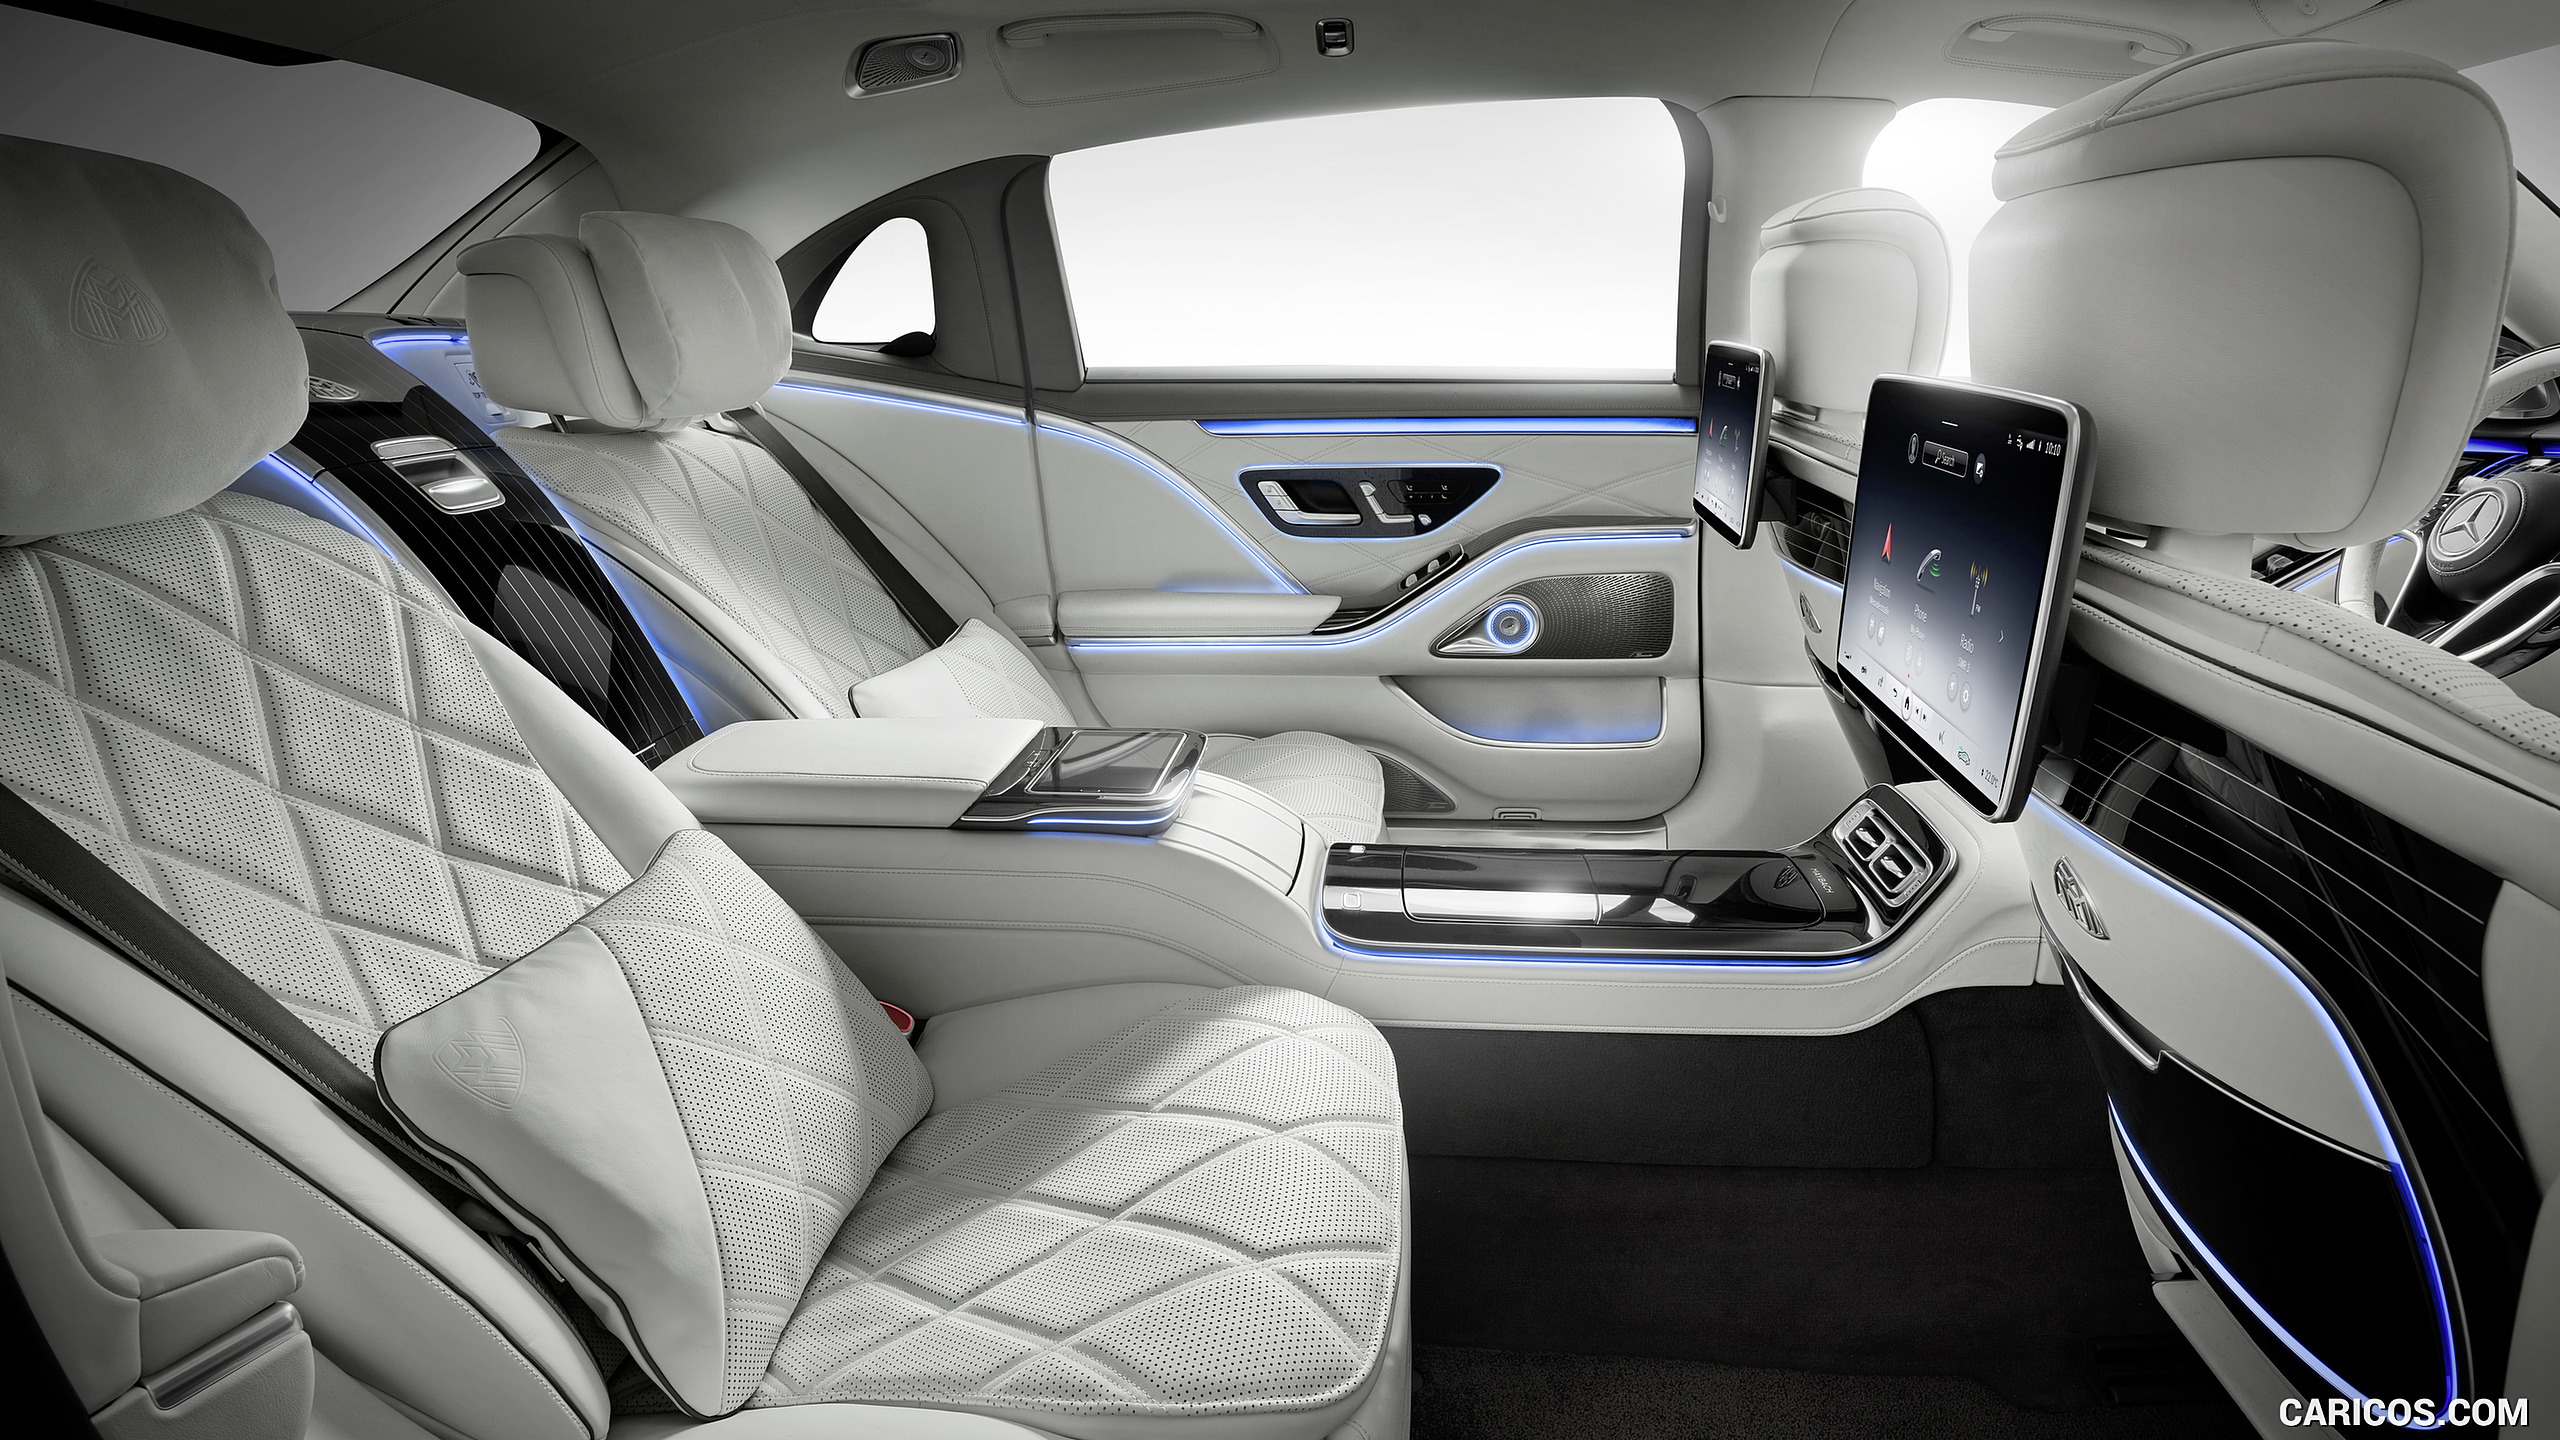 2021 Mercedes-Maybach S-Class (Color: Designo Crystal White / Silver Grey Pearl) - Interior, Rear Seats, #116 of 157